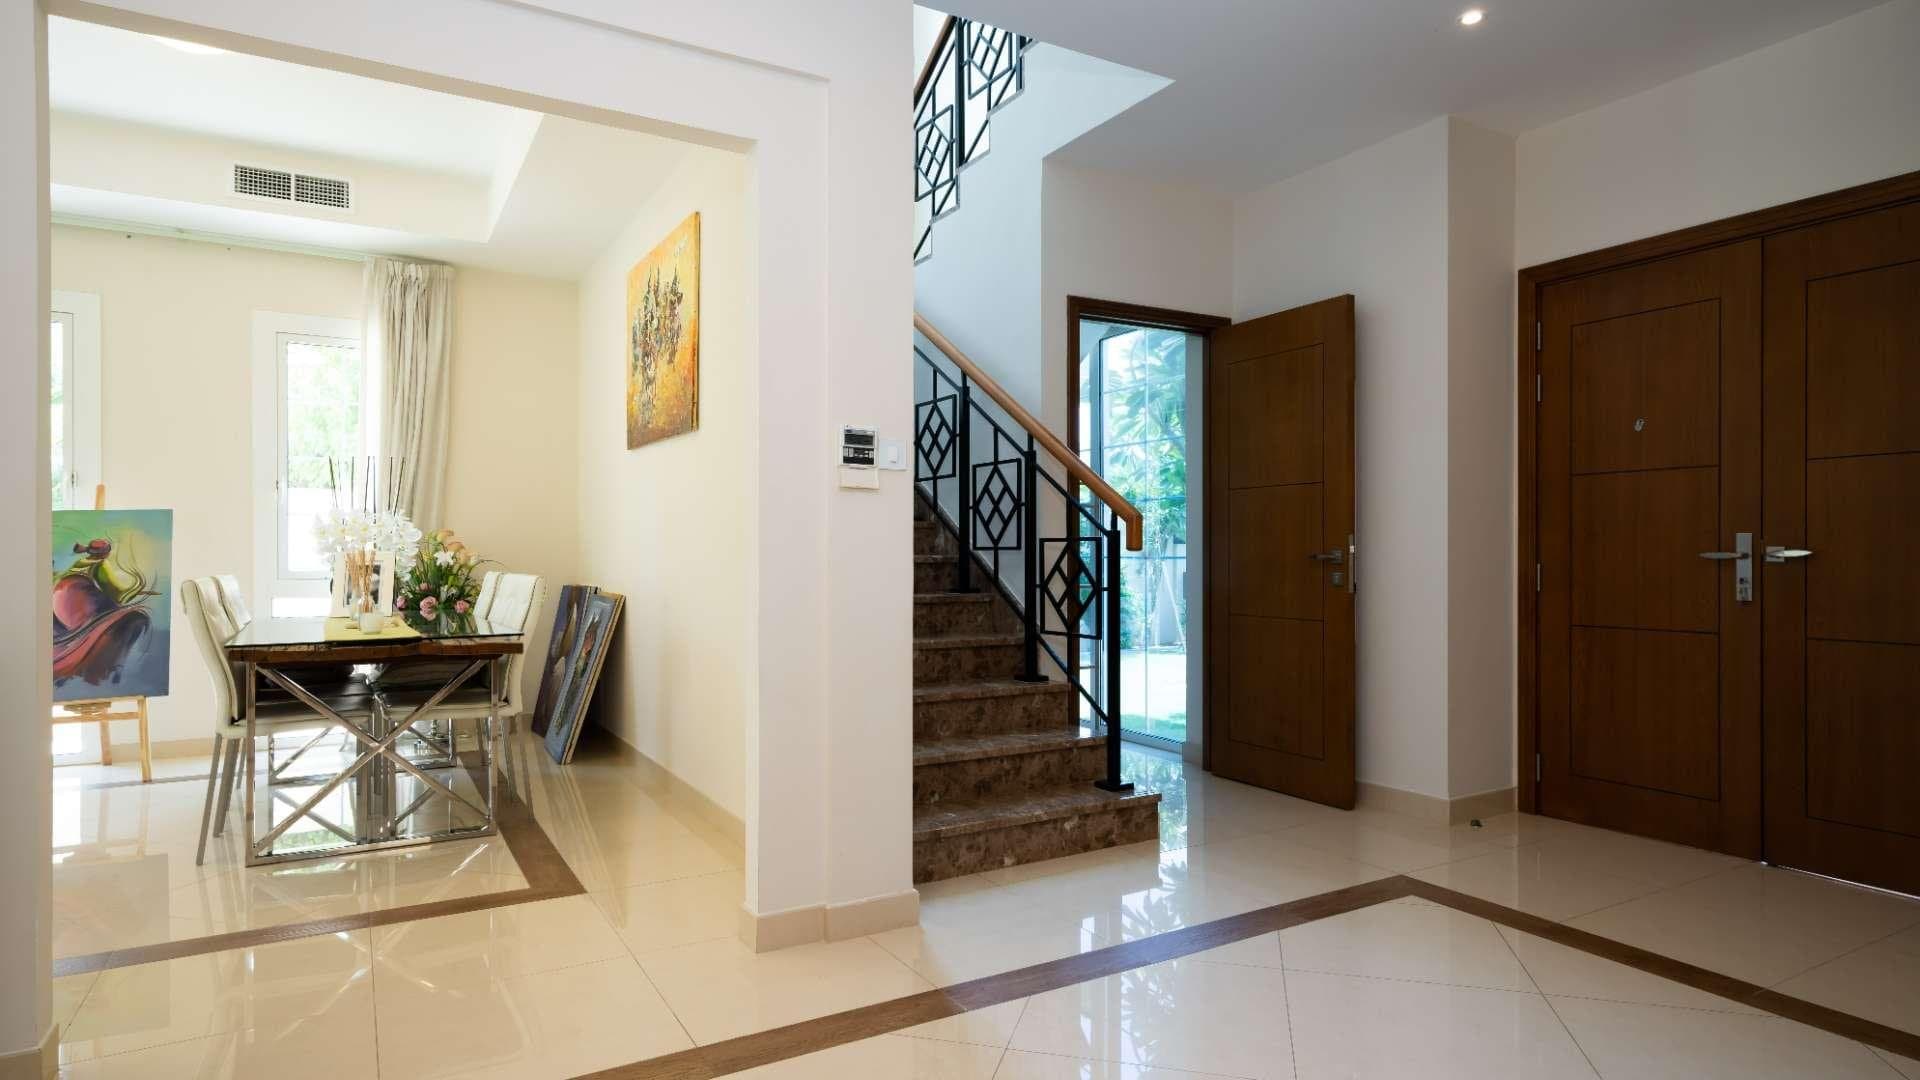 3 Bedroom Villa For Sale Rahat Lp32685 6b505db1c96d180.jpg